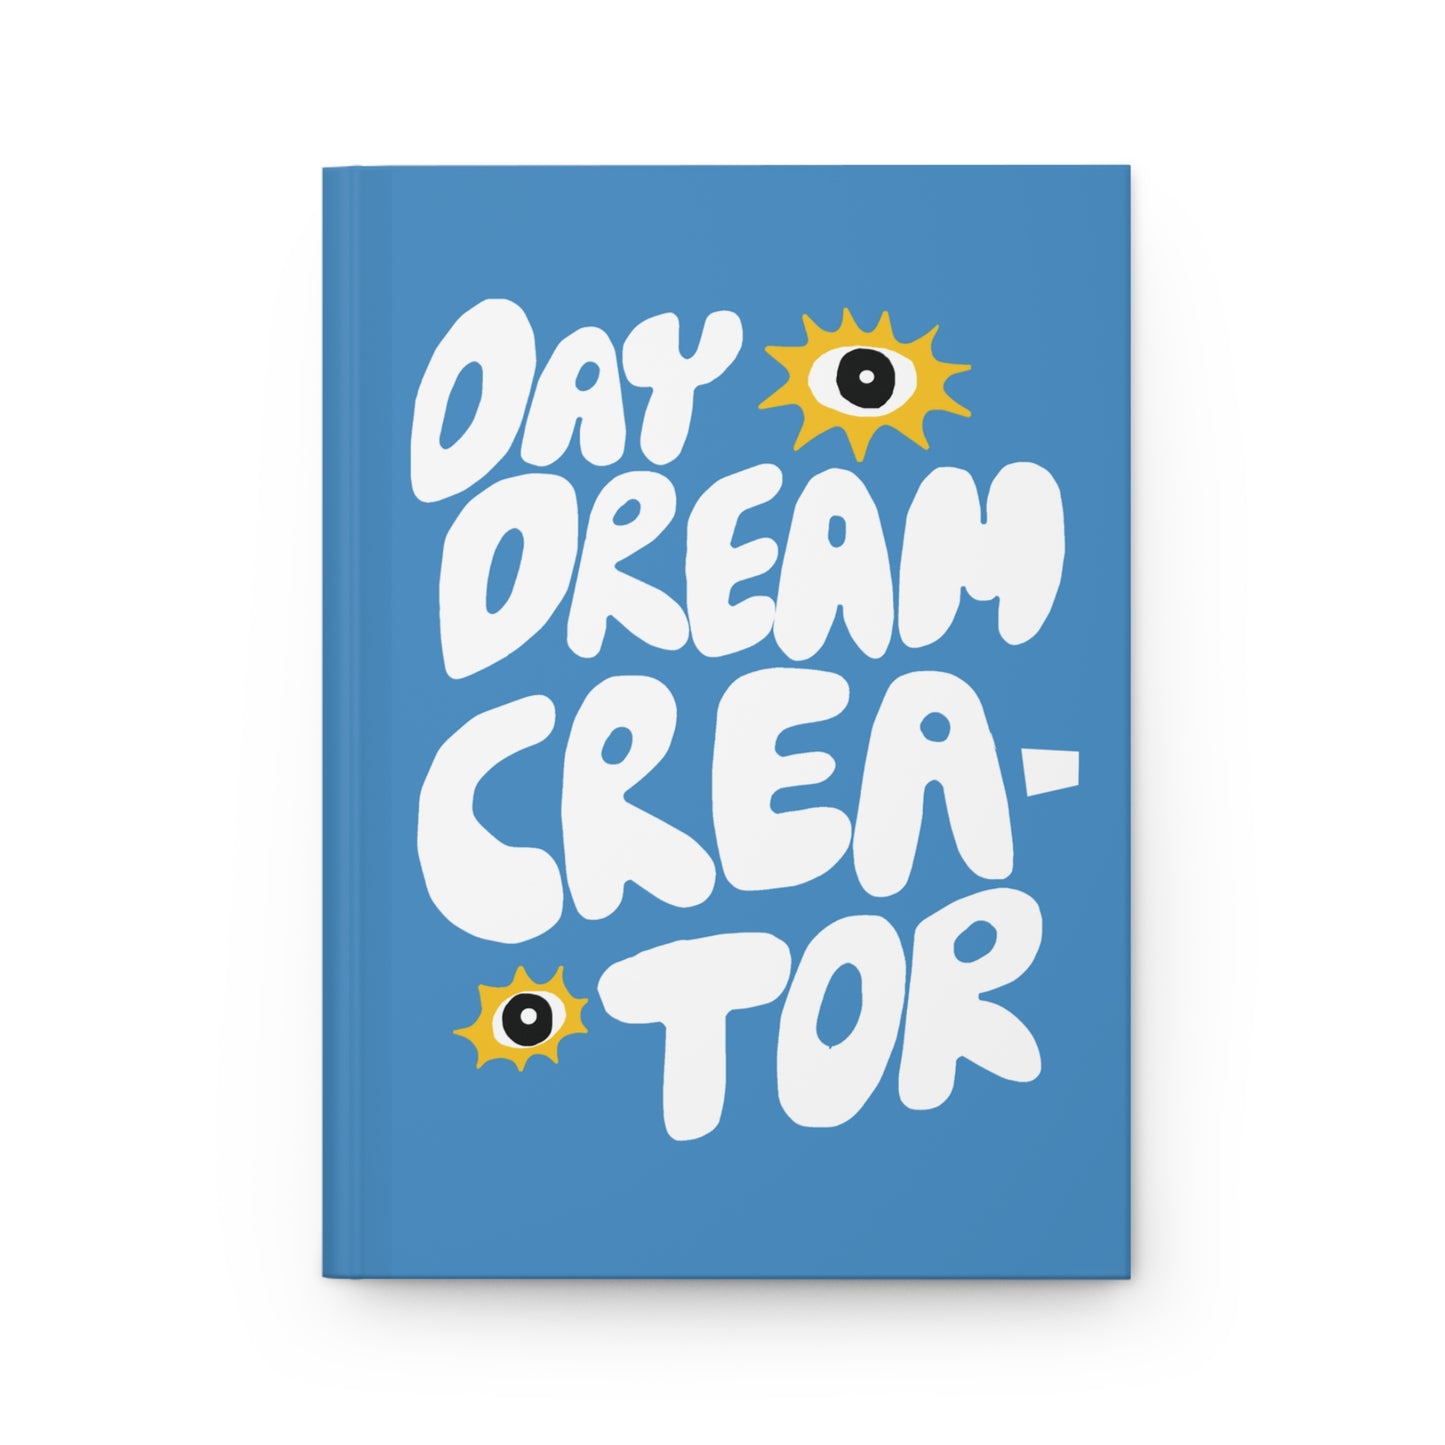 Creators Day Dreamer Hardcover Journal in Blue